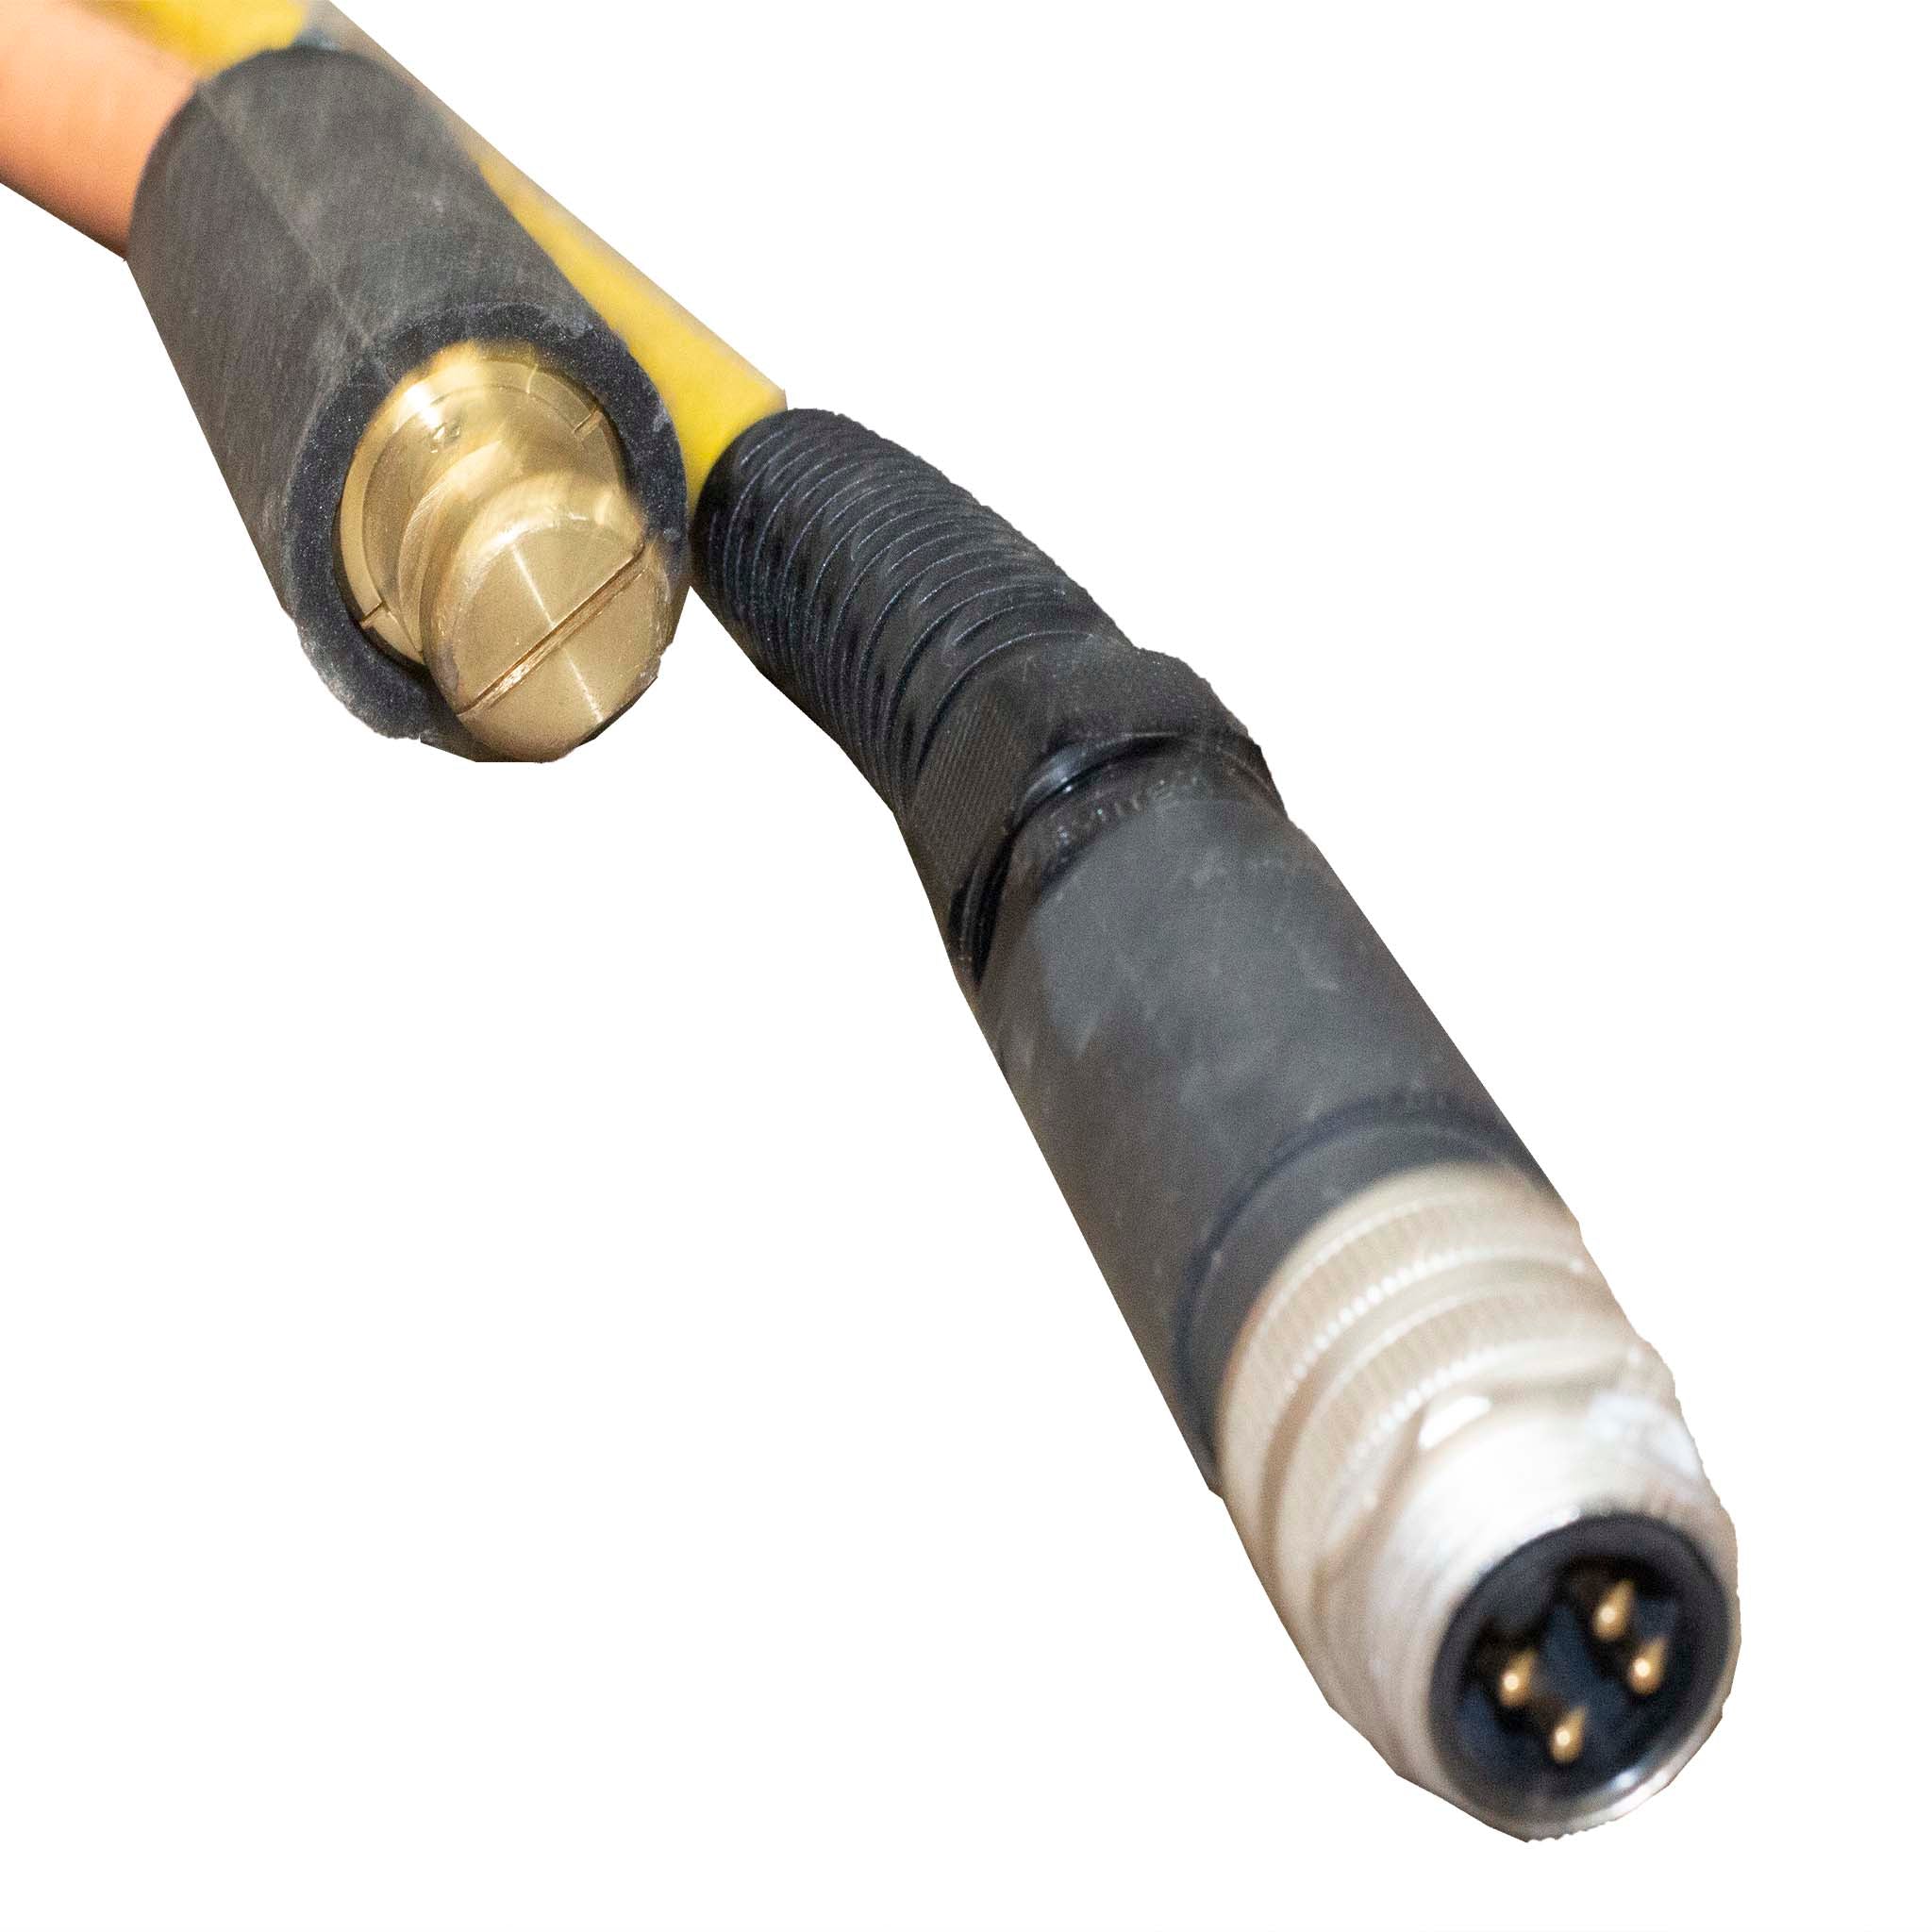 Barrel Jack Extension Cable - M-F (6 ft) - COM-11707 - SparkFun Electronics